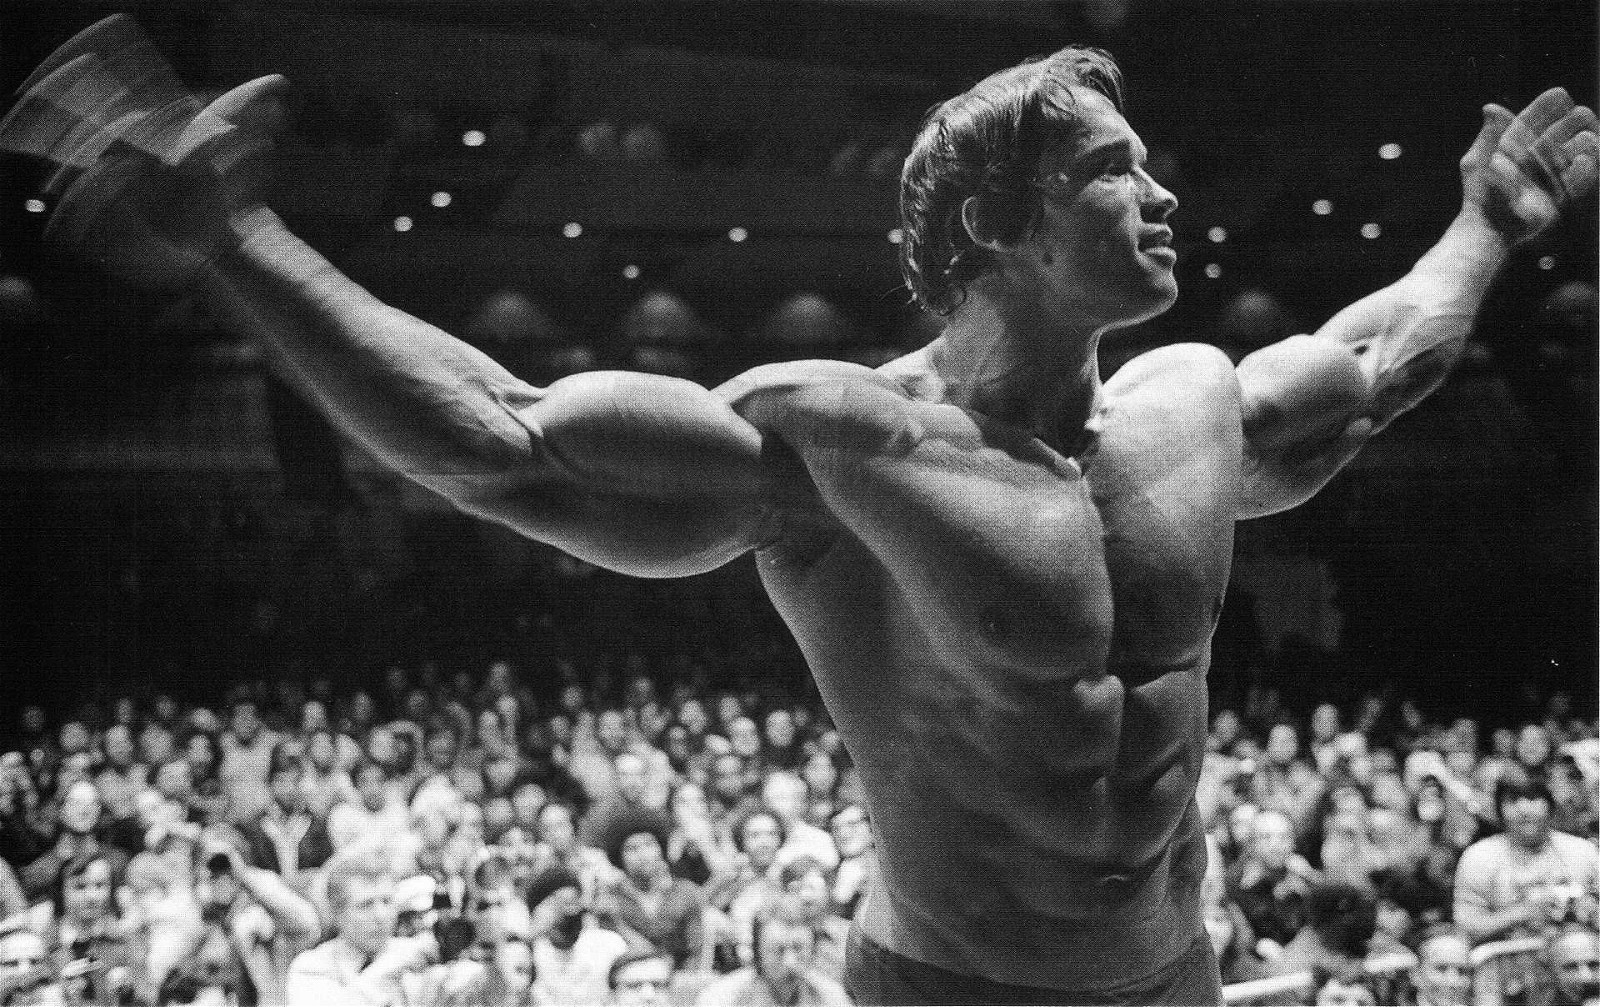 Arnold Schwarzenegger during his bodybuilding days